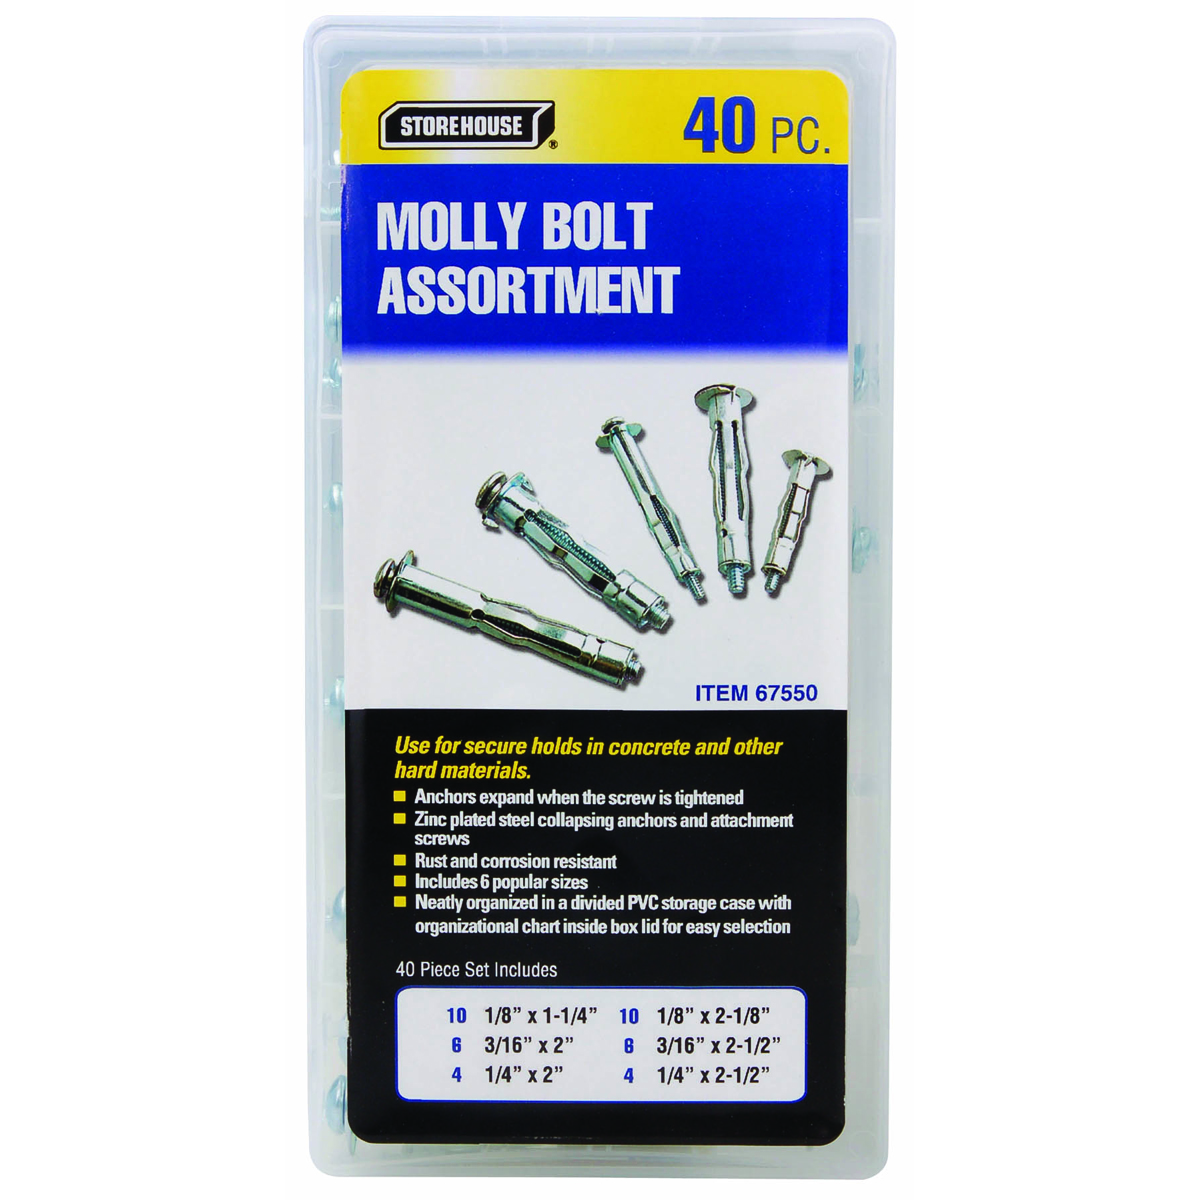 STOREHOUSE 40 Piece Molly Bolt Assortment - Item 67550